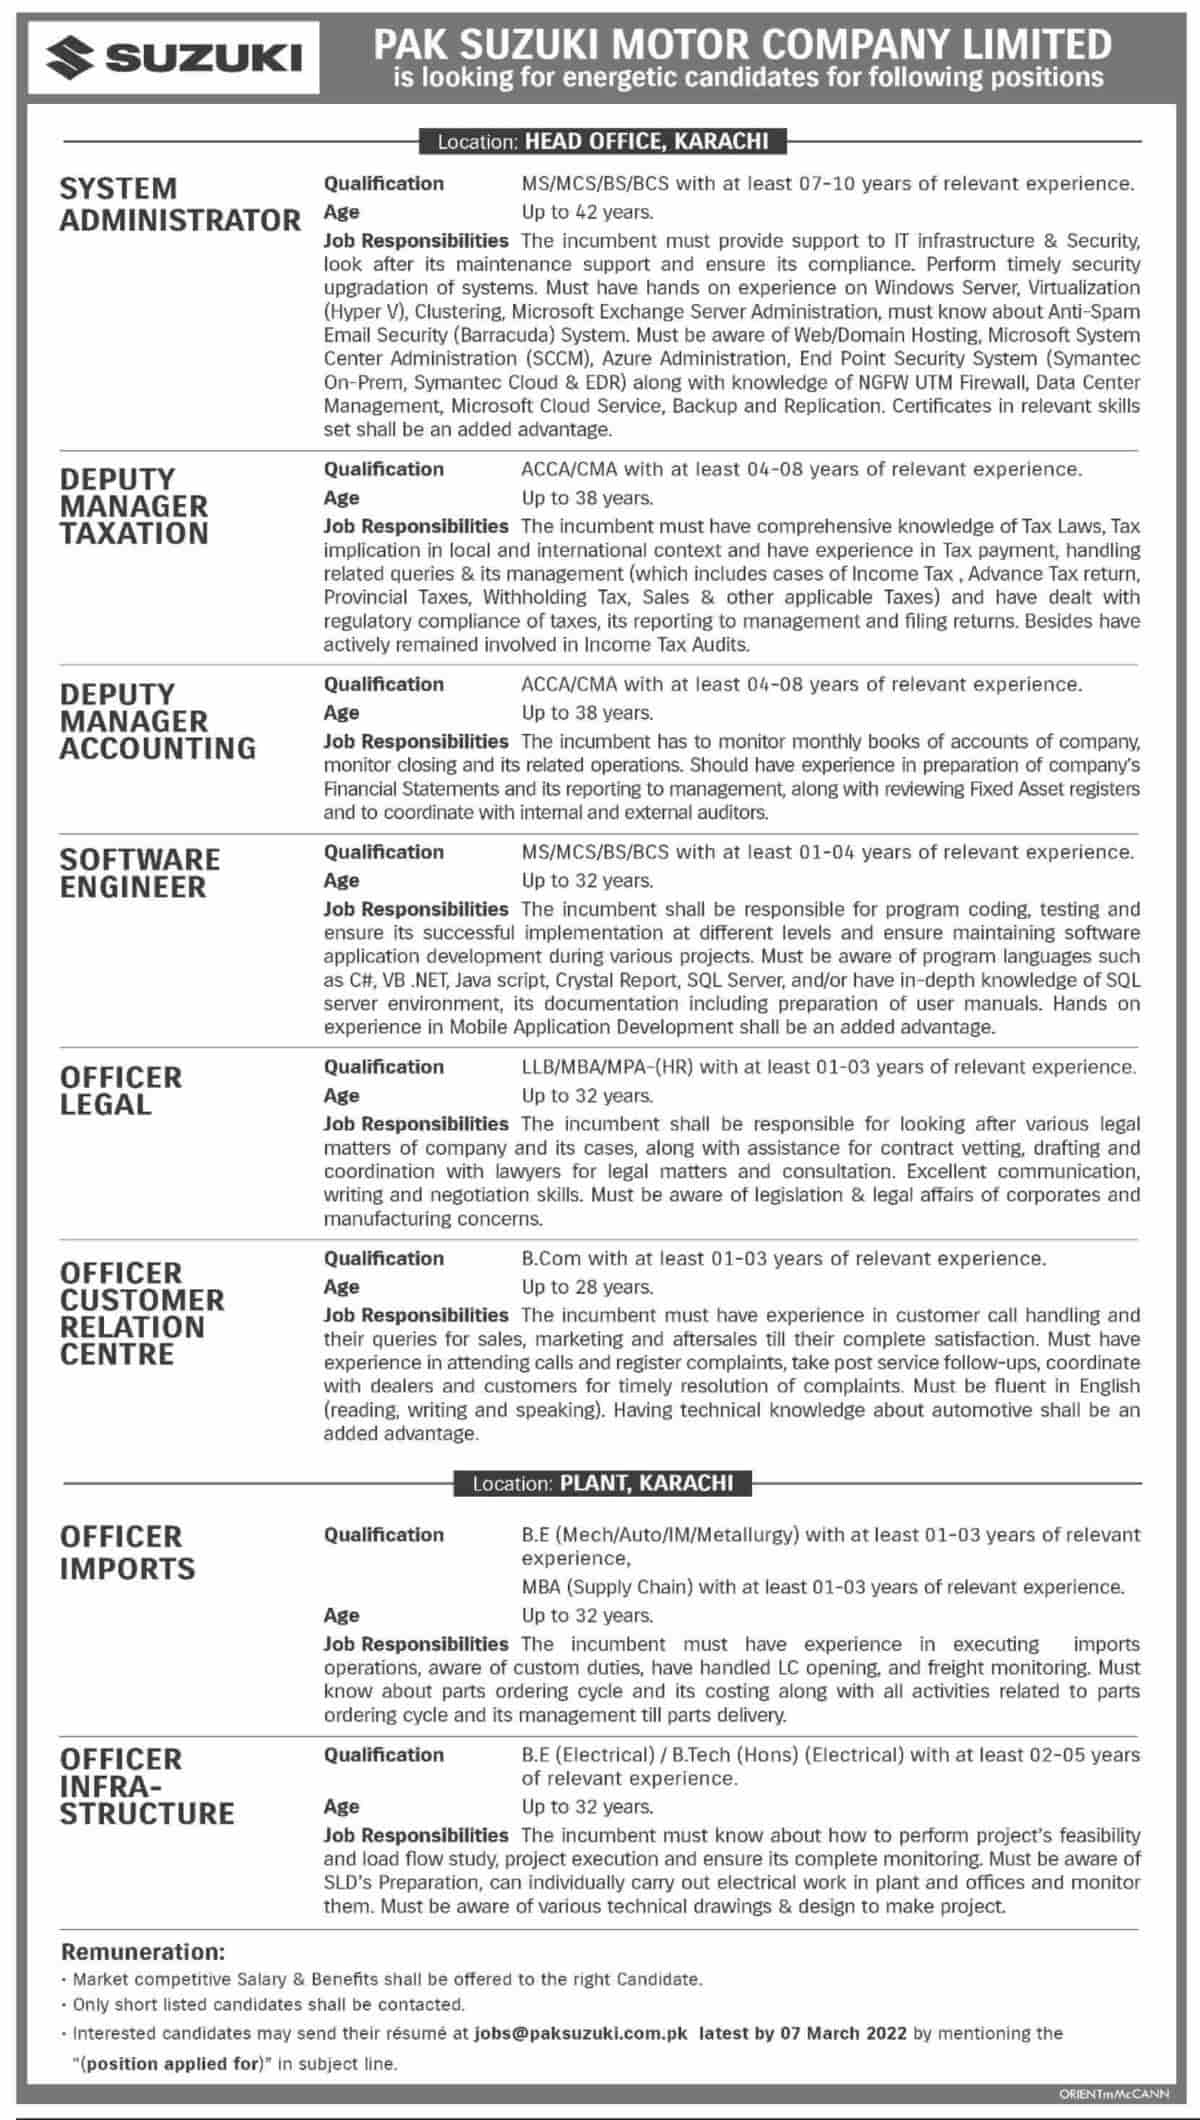 Pak Suzuki Motor Company Limited Karachi Jobs 2022 Apply Online Latest